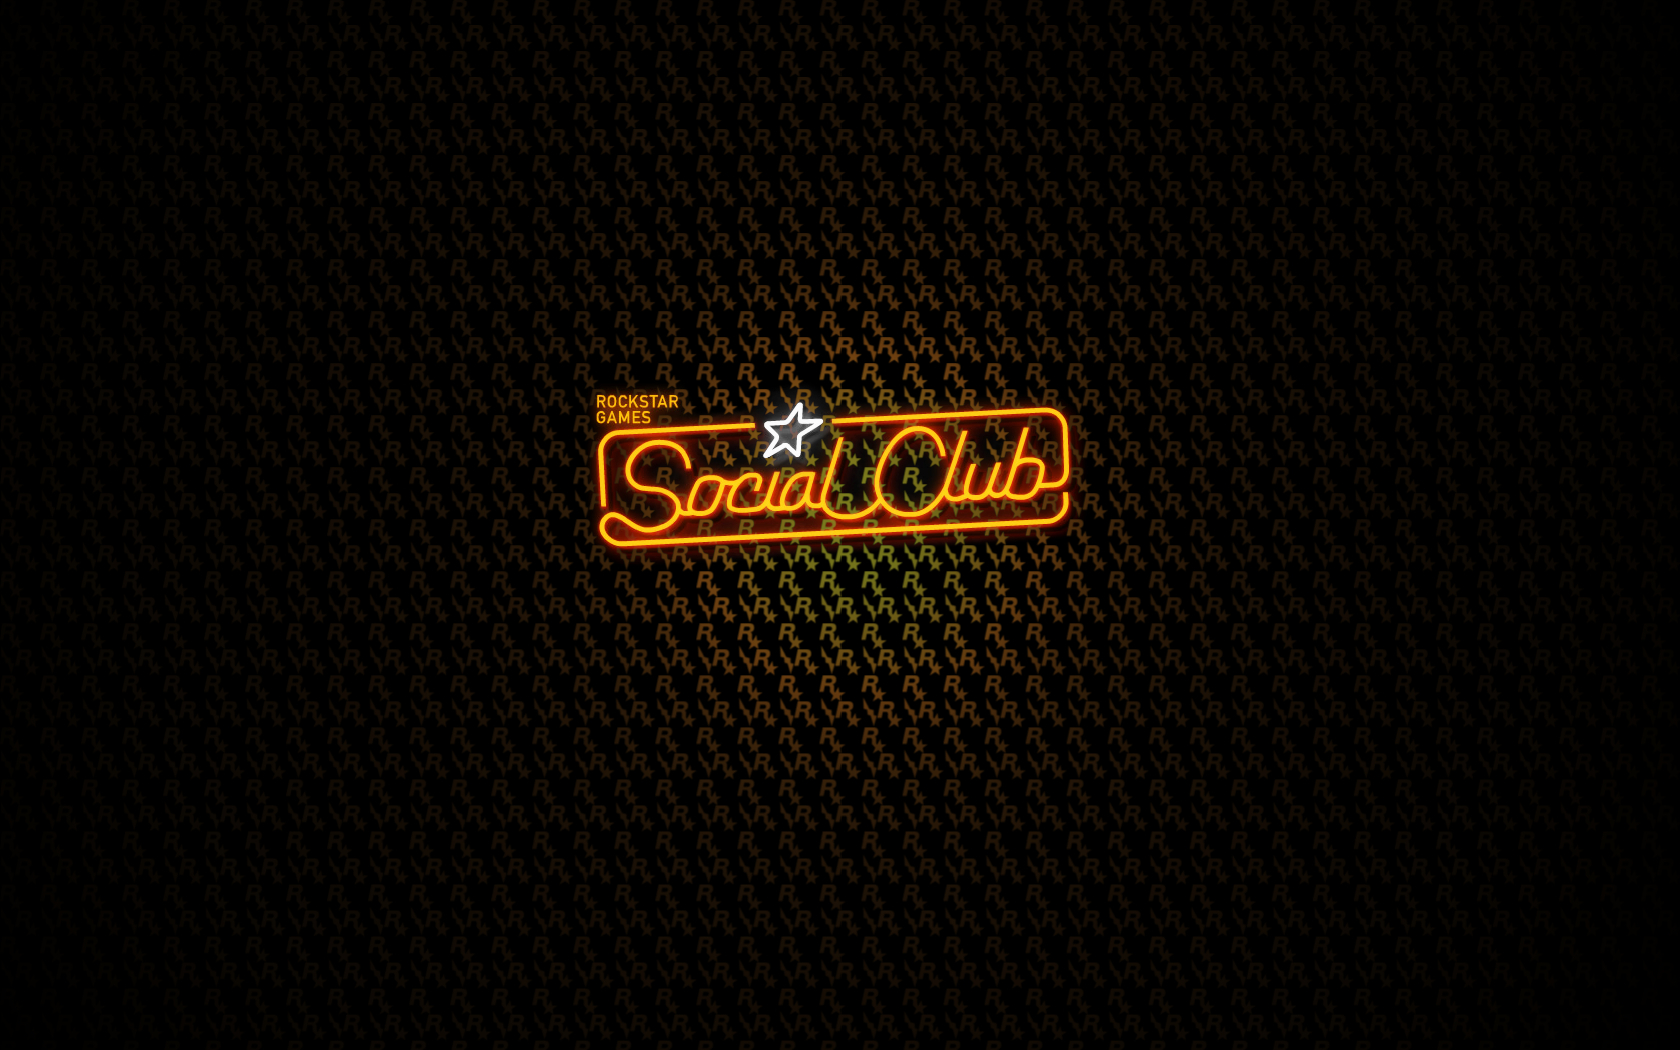 Social Club Background. Club Nintendo